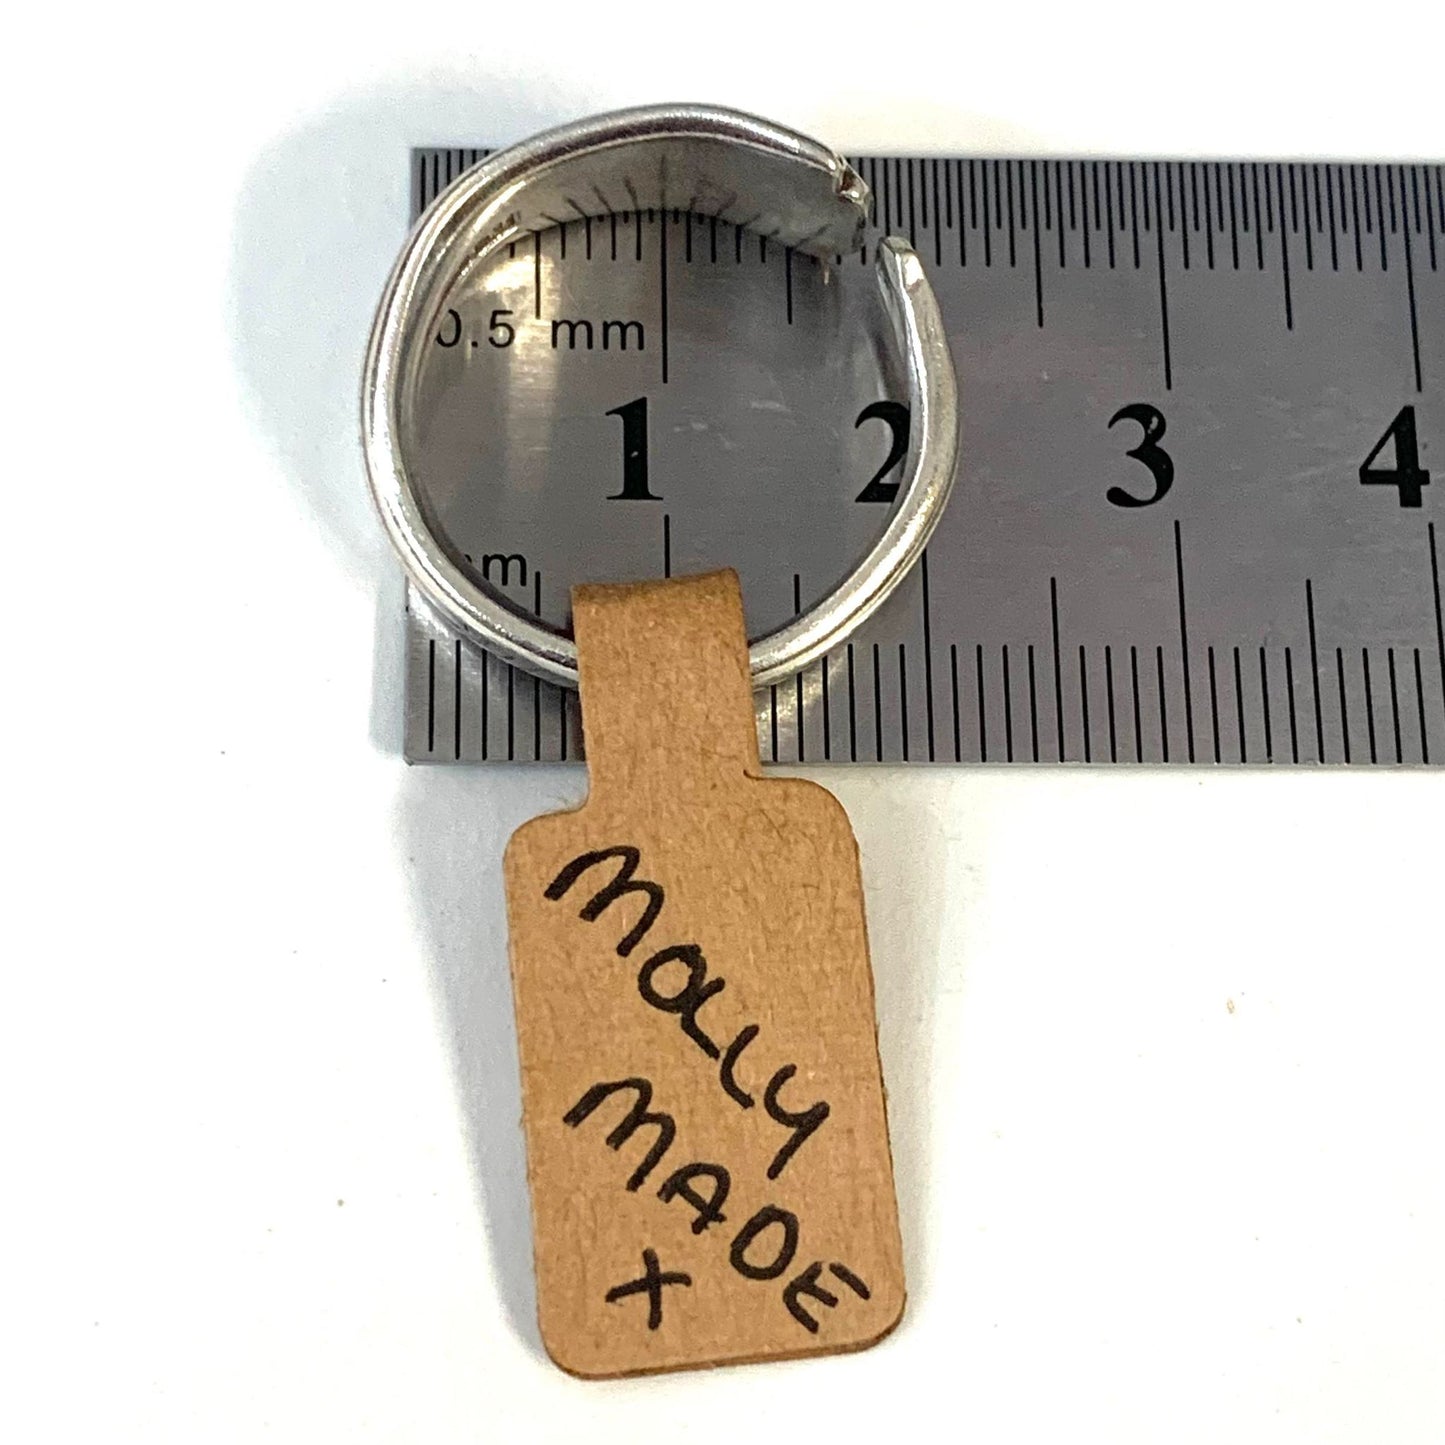 MOLLY MADE - Silverware Ring - Handle #2- Fan